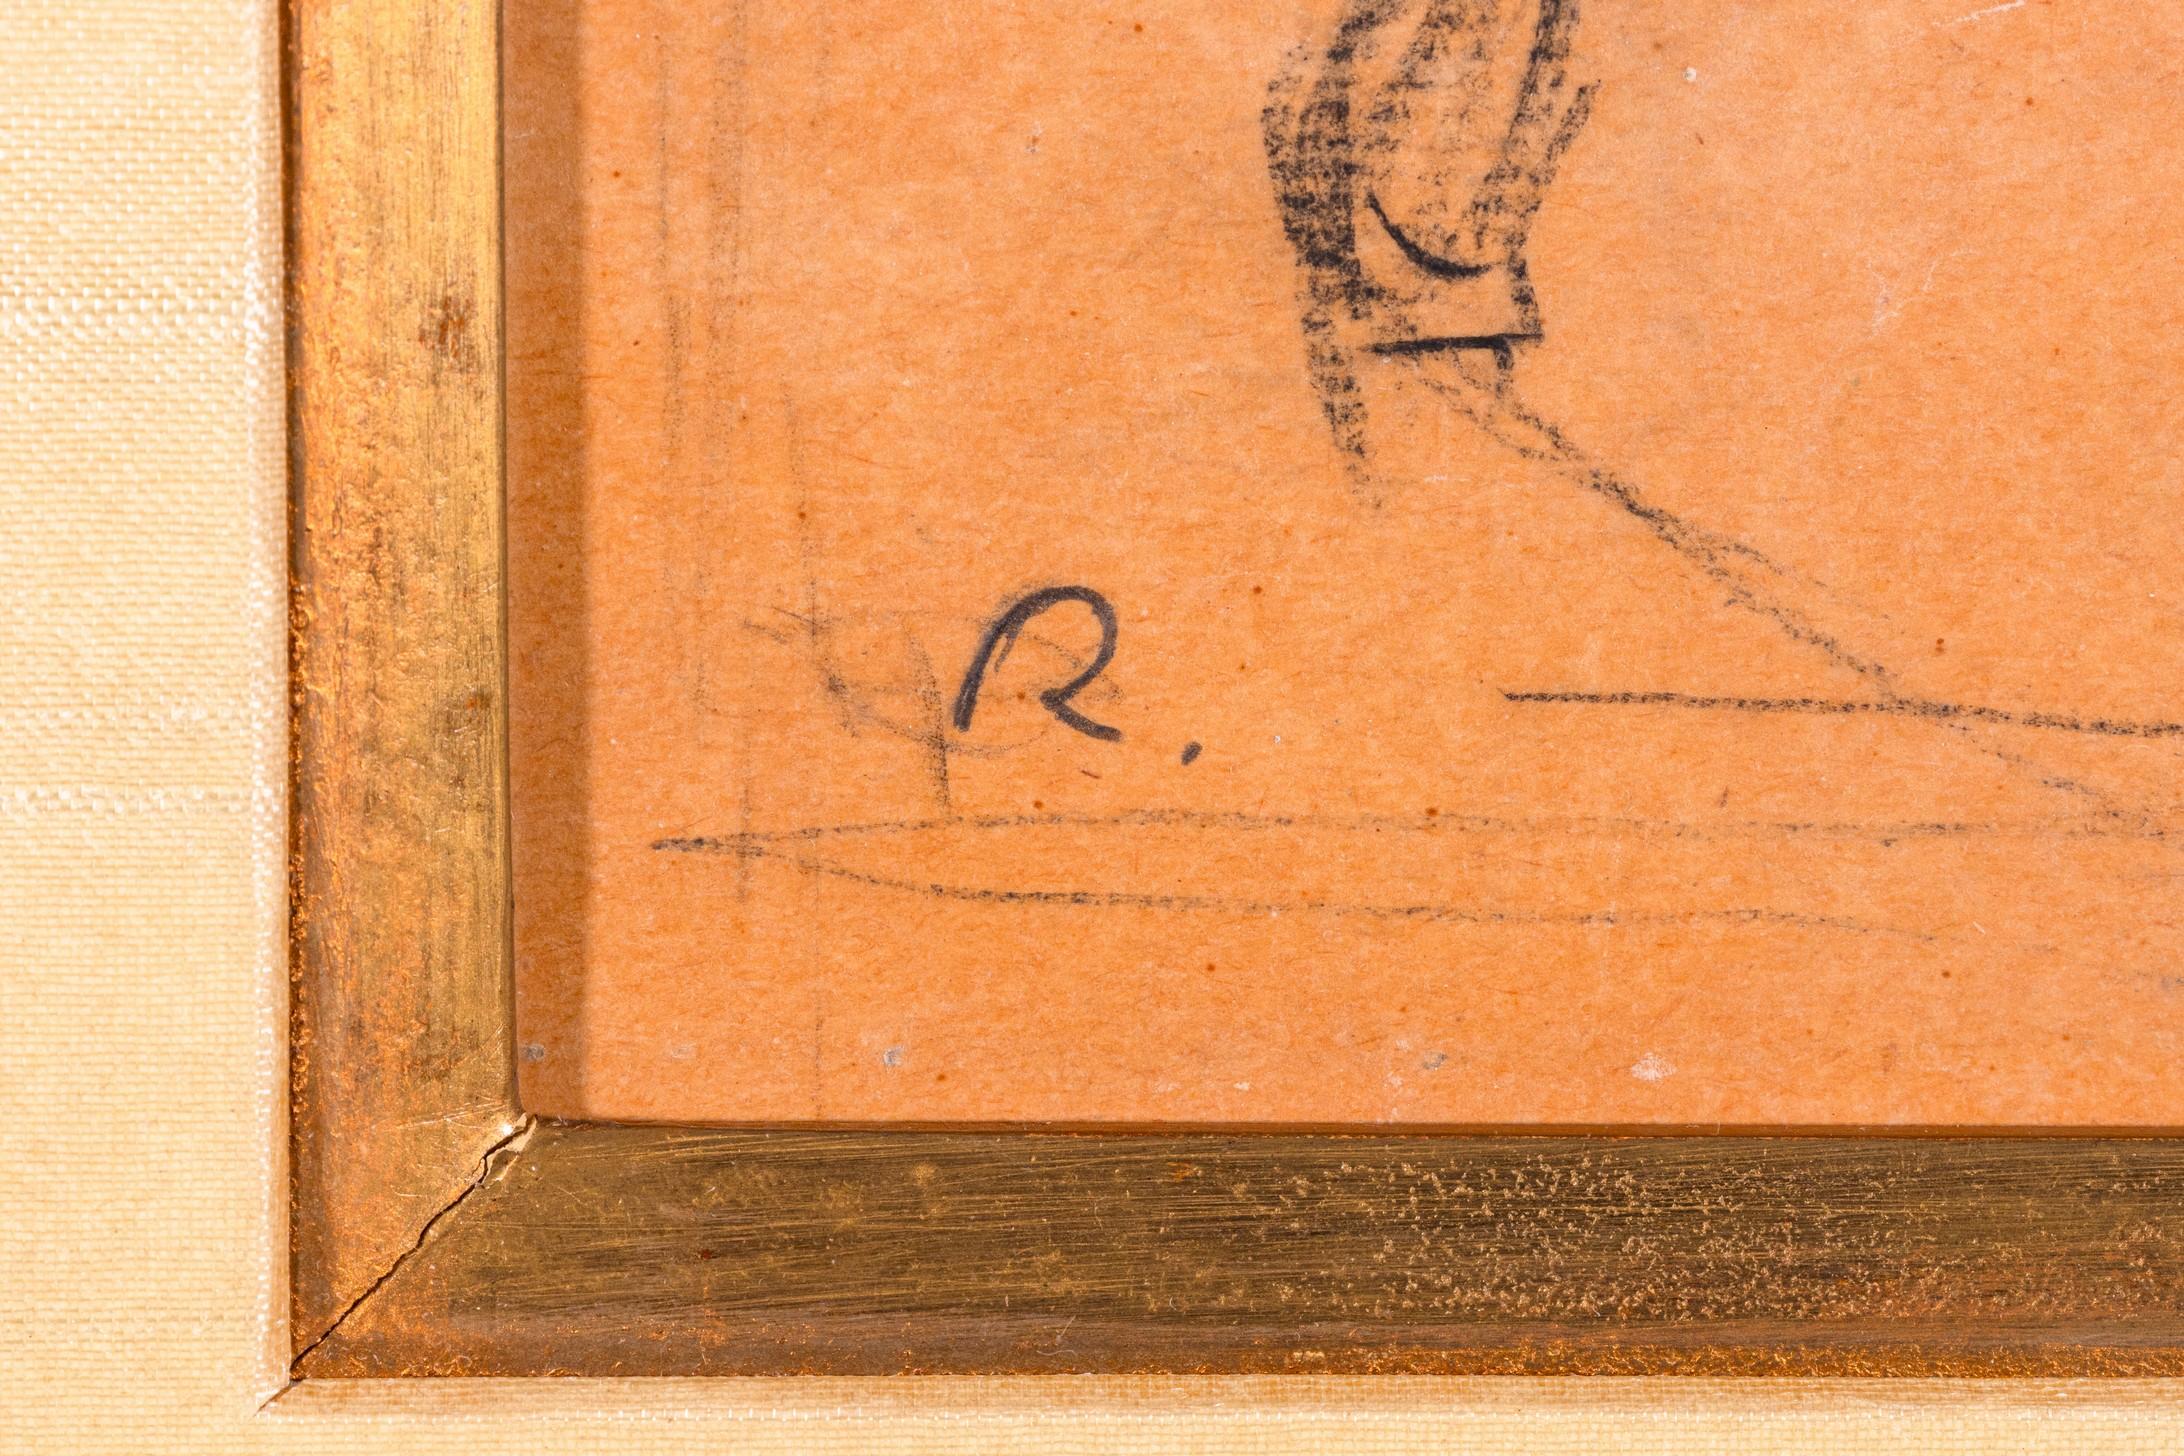 Pierre-Auguste Renoir Madame de Galéa Signed Original Sketch Graphite on Paper For Sale 3